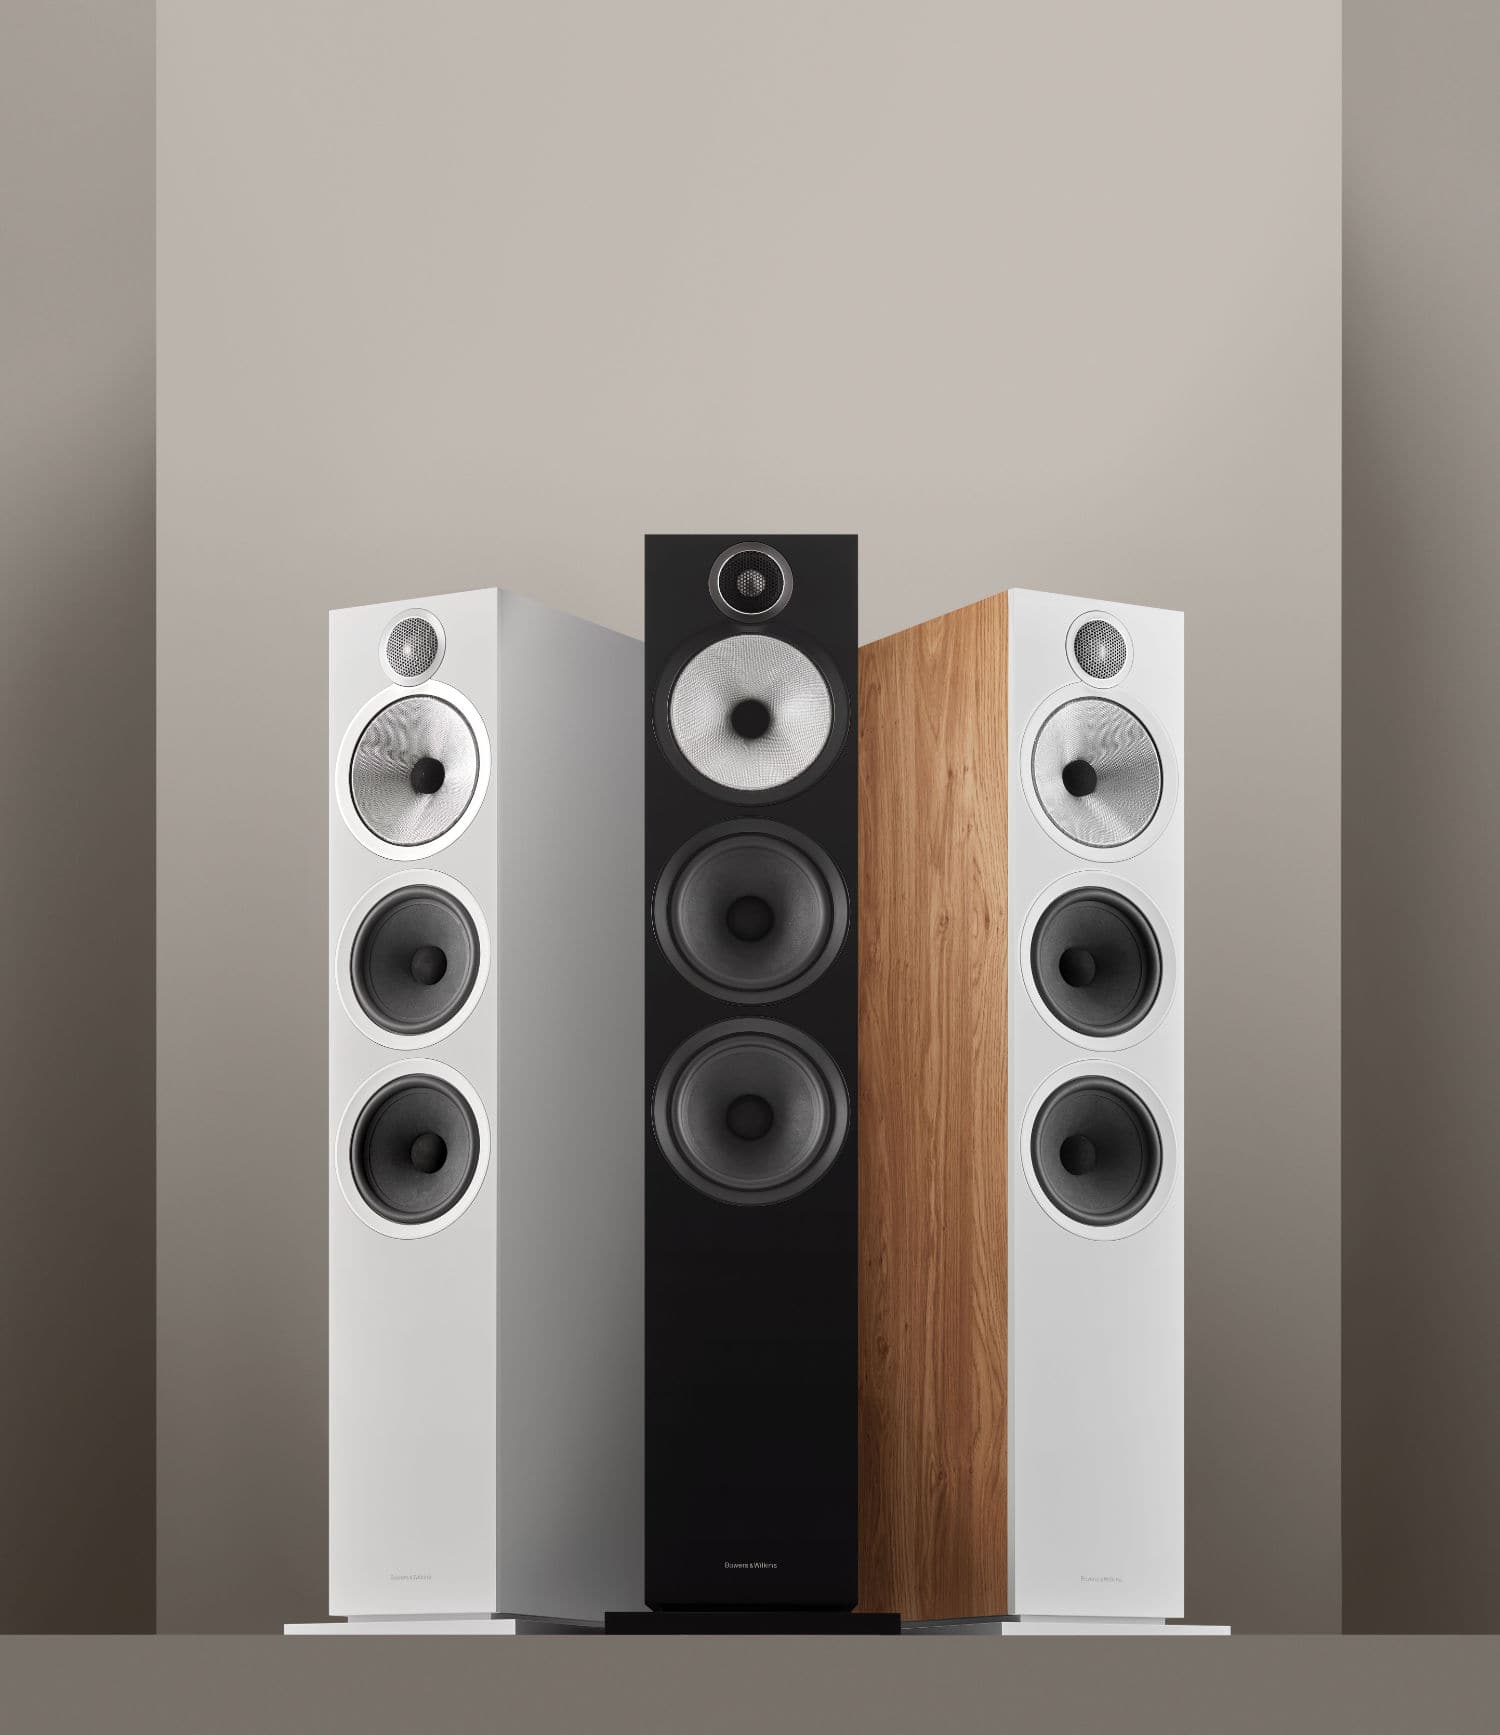 Bowers & Wilkins announces its new 600 series of loudspeakers